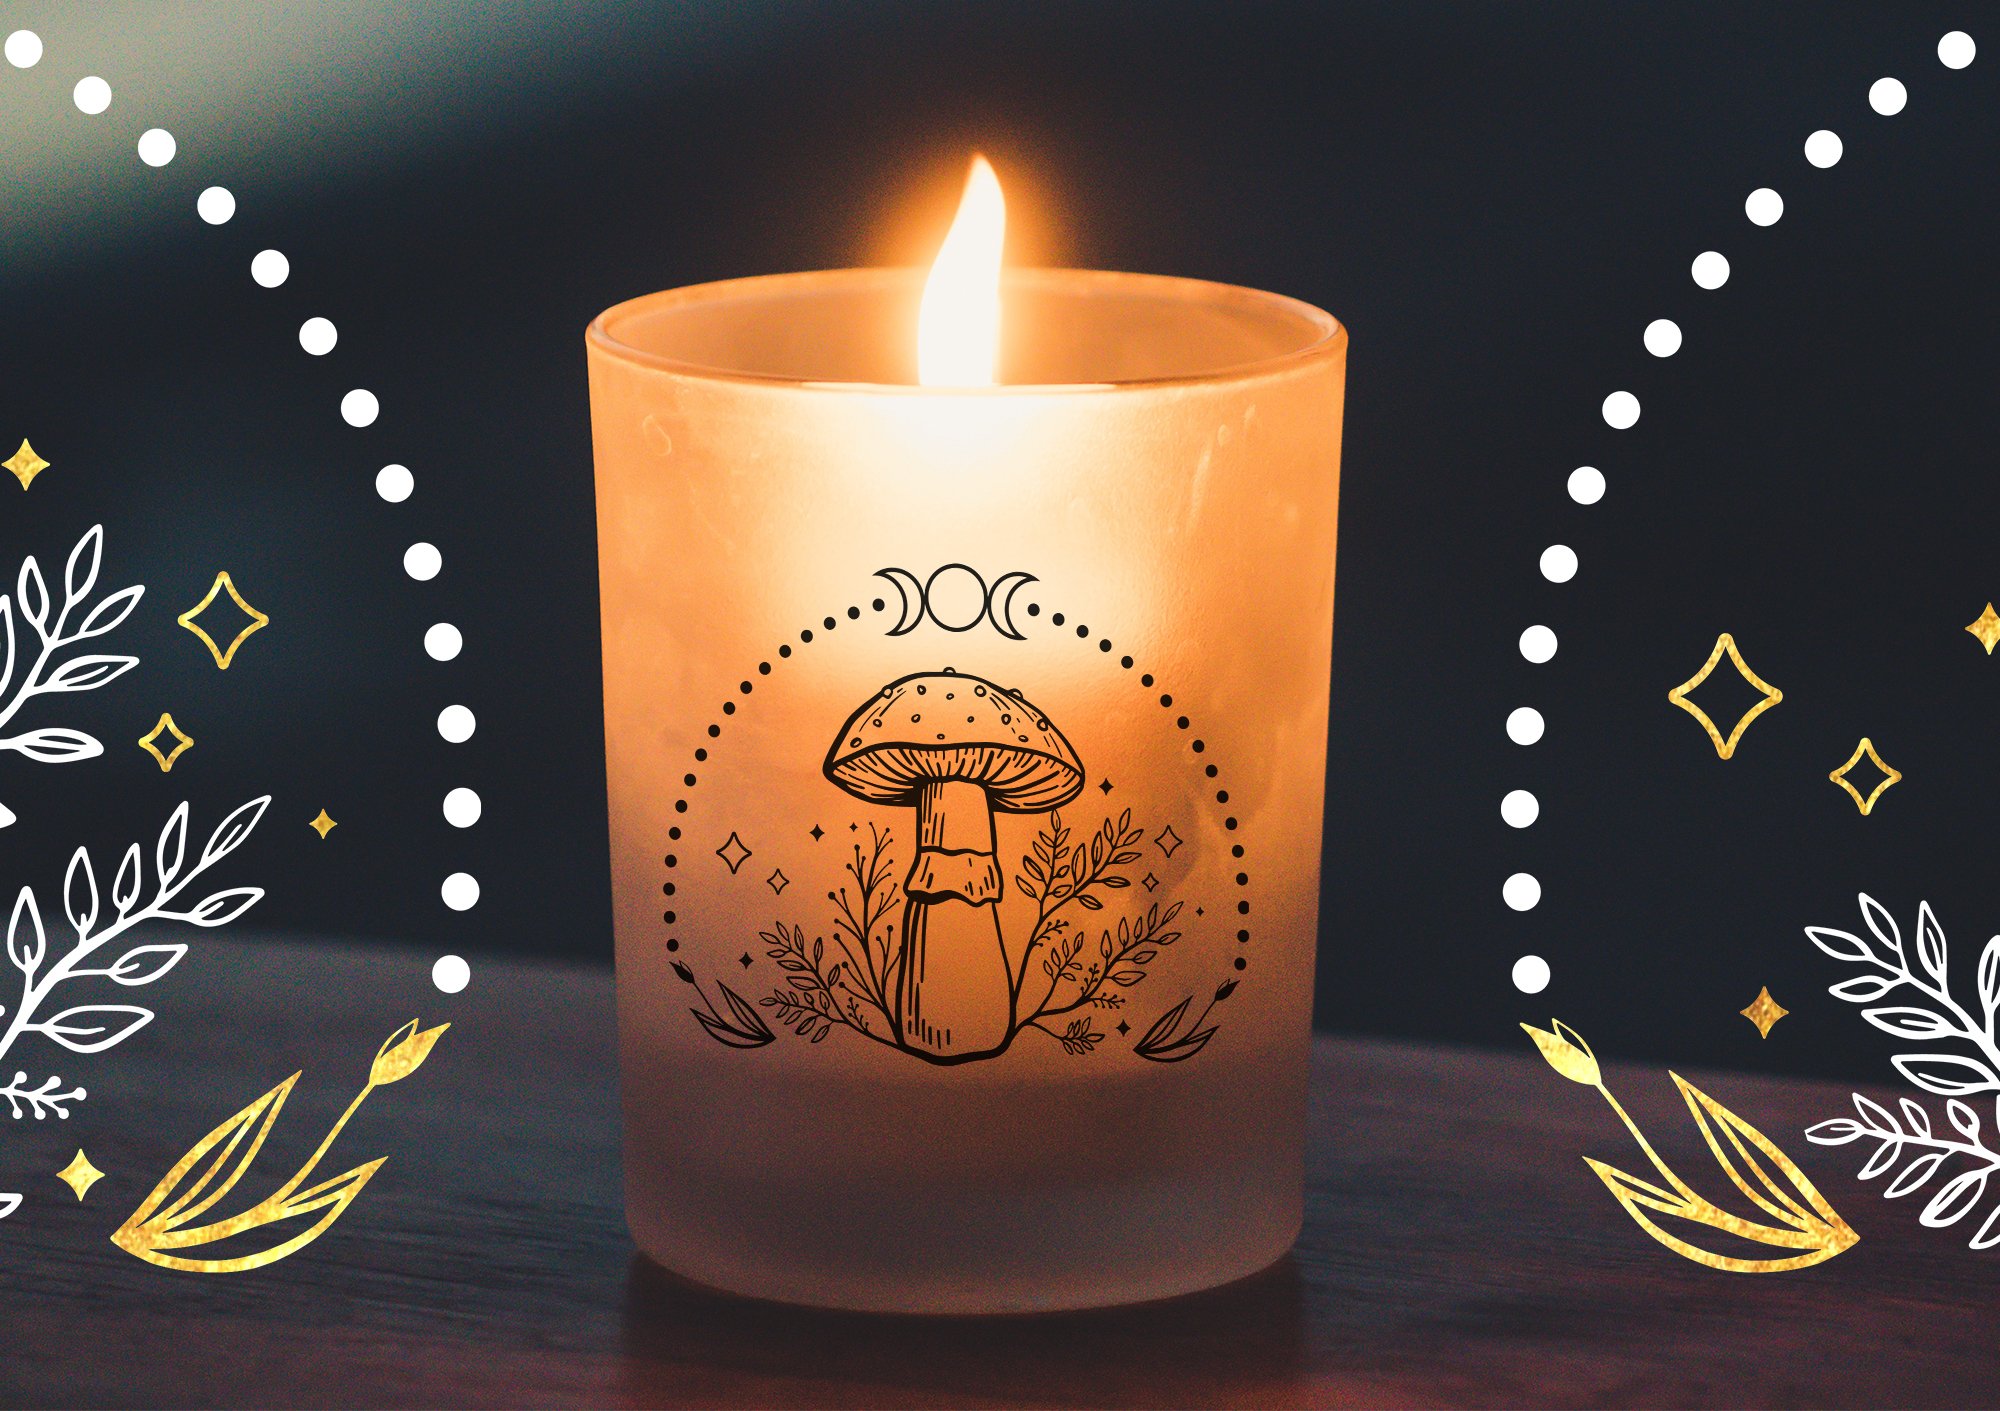 Magic candle with mushroom logo.